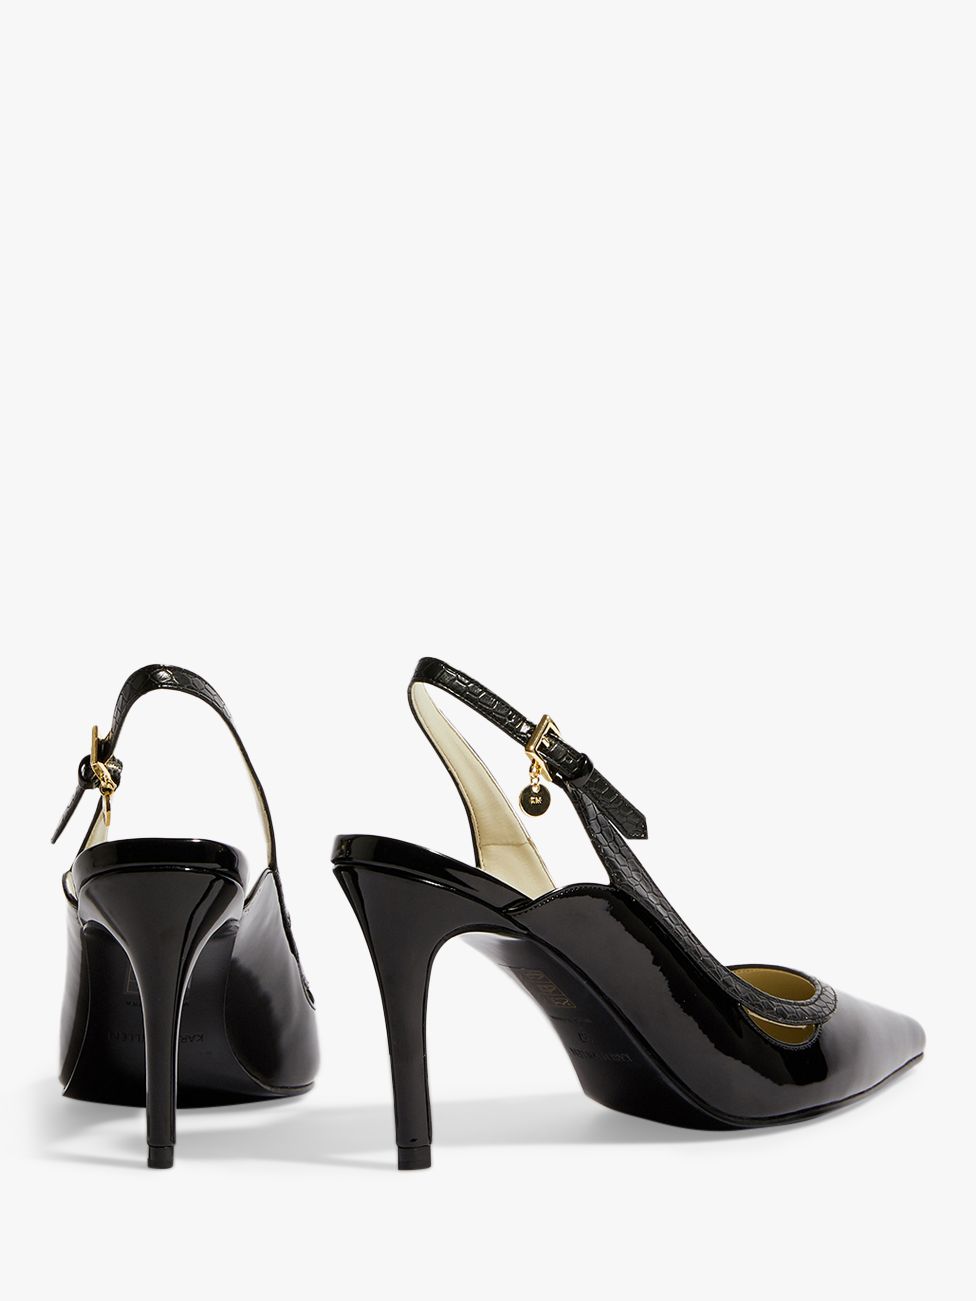 Karen Millen Slingback Stiletto Heel Court Shoes, Black Patent